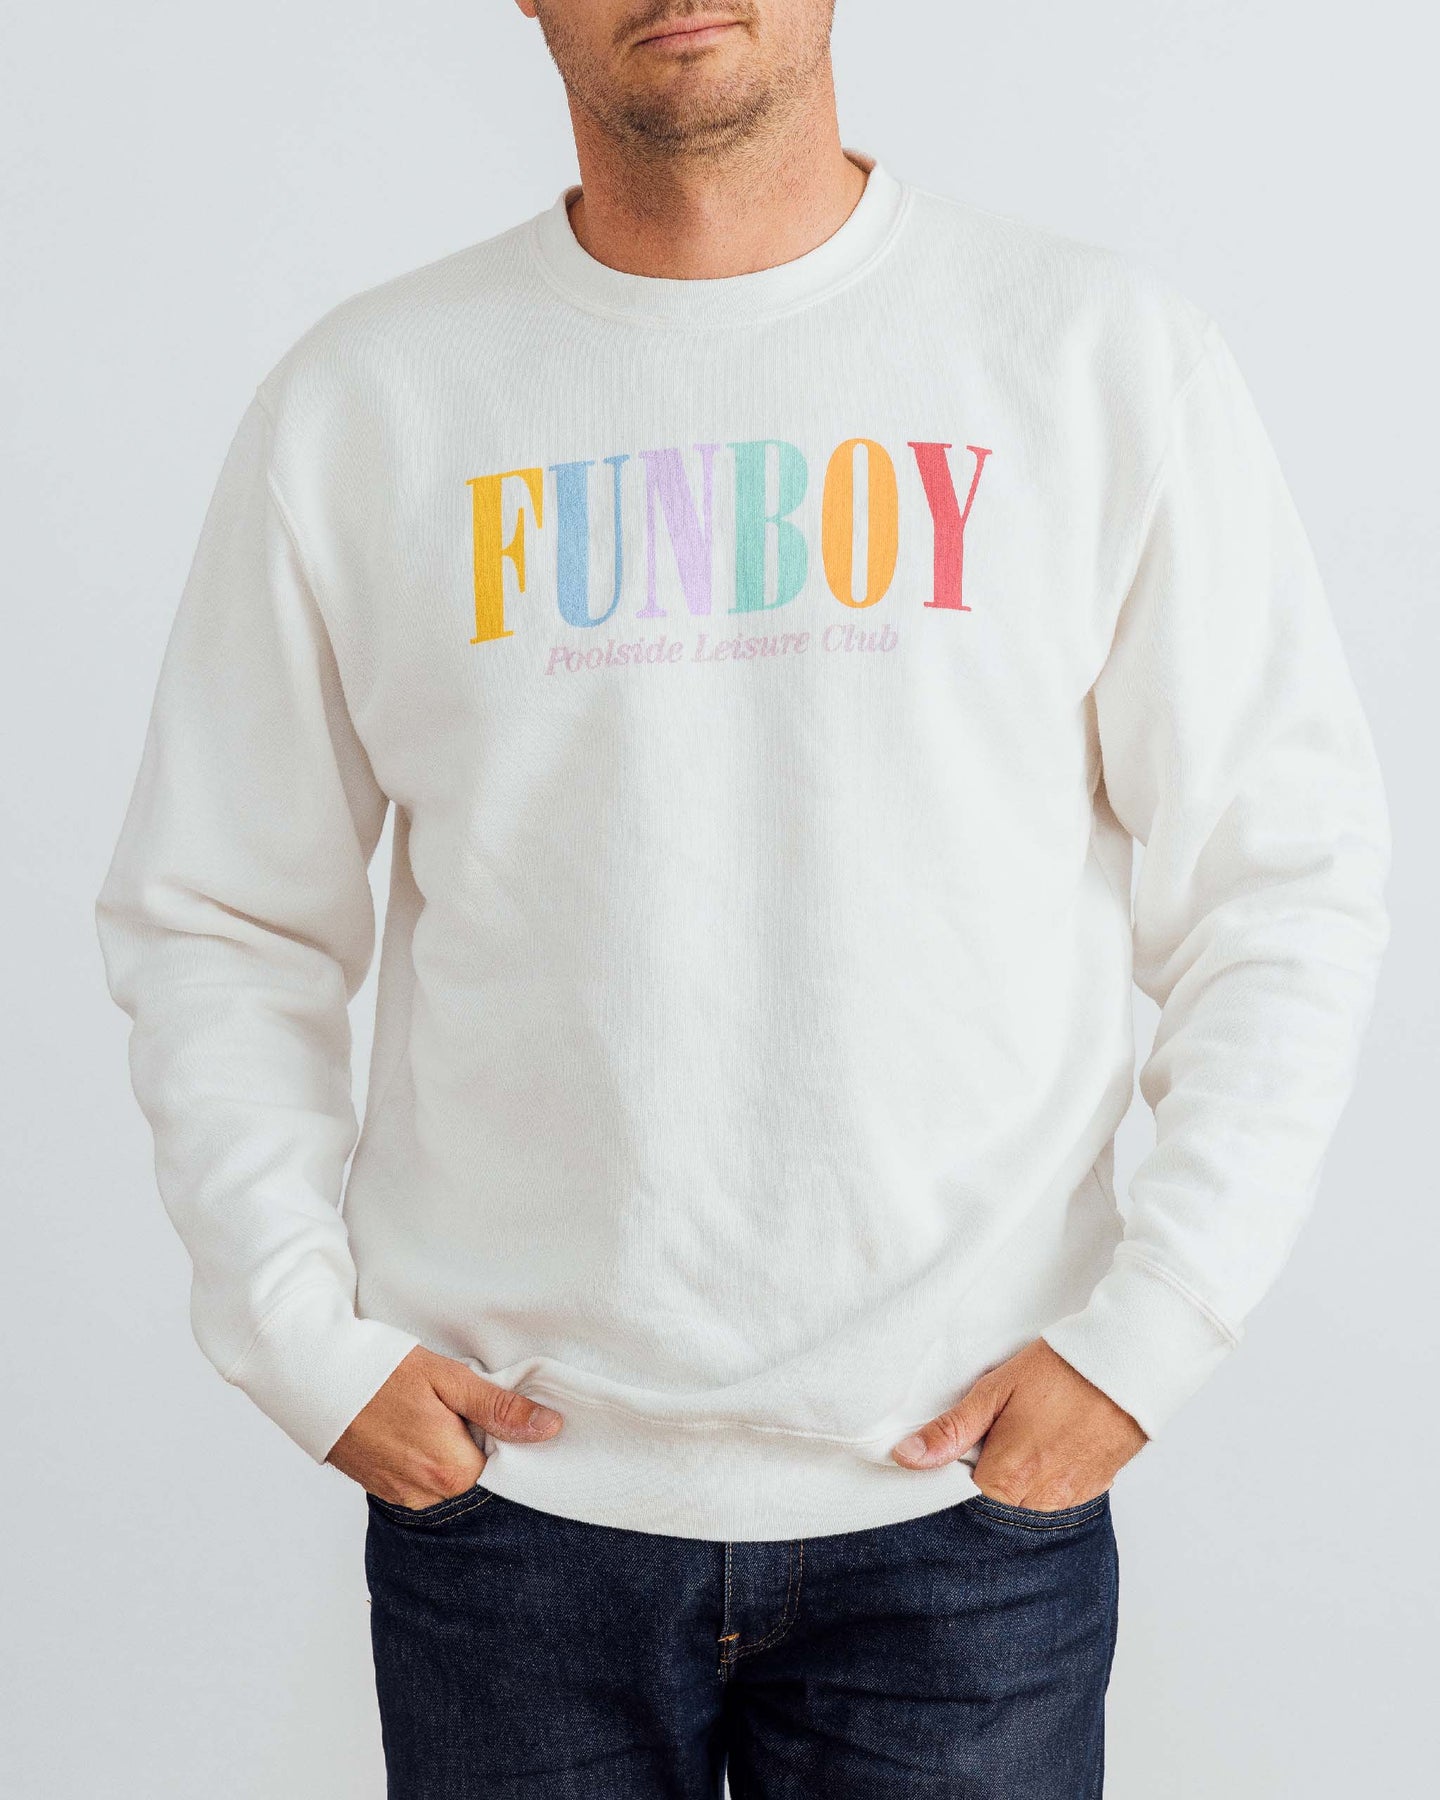 Funboy Merch - White Varsity Crewneck Sweatshirt